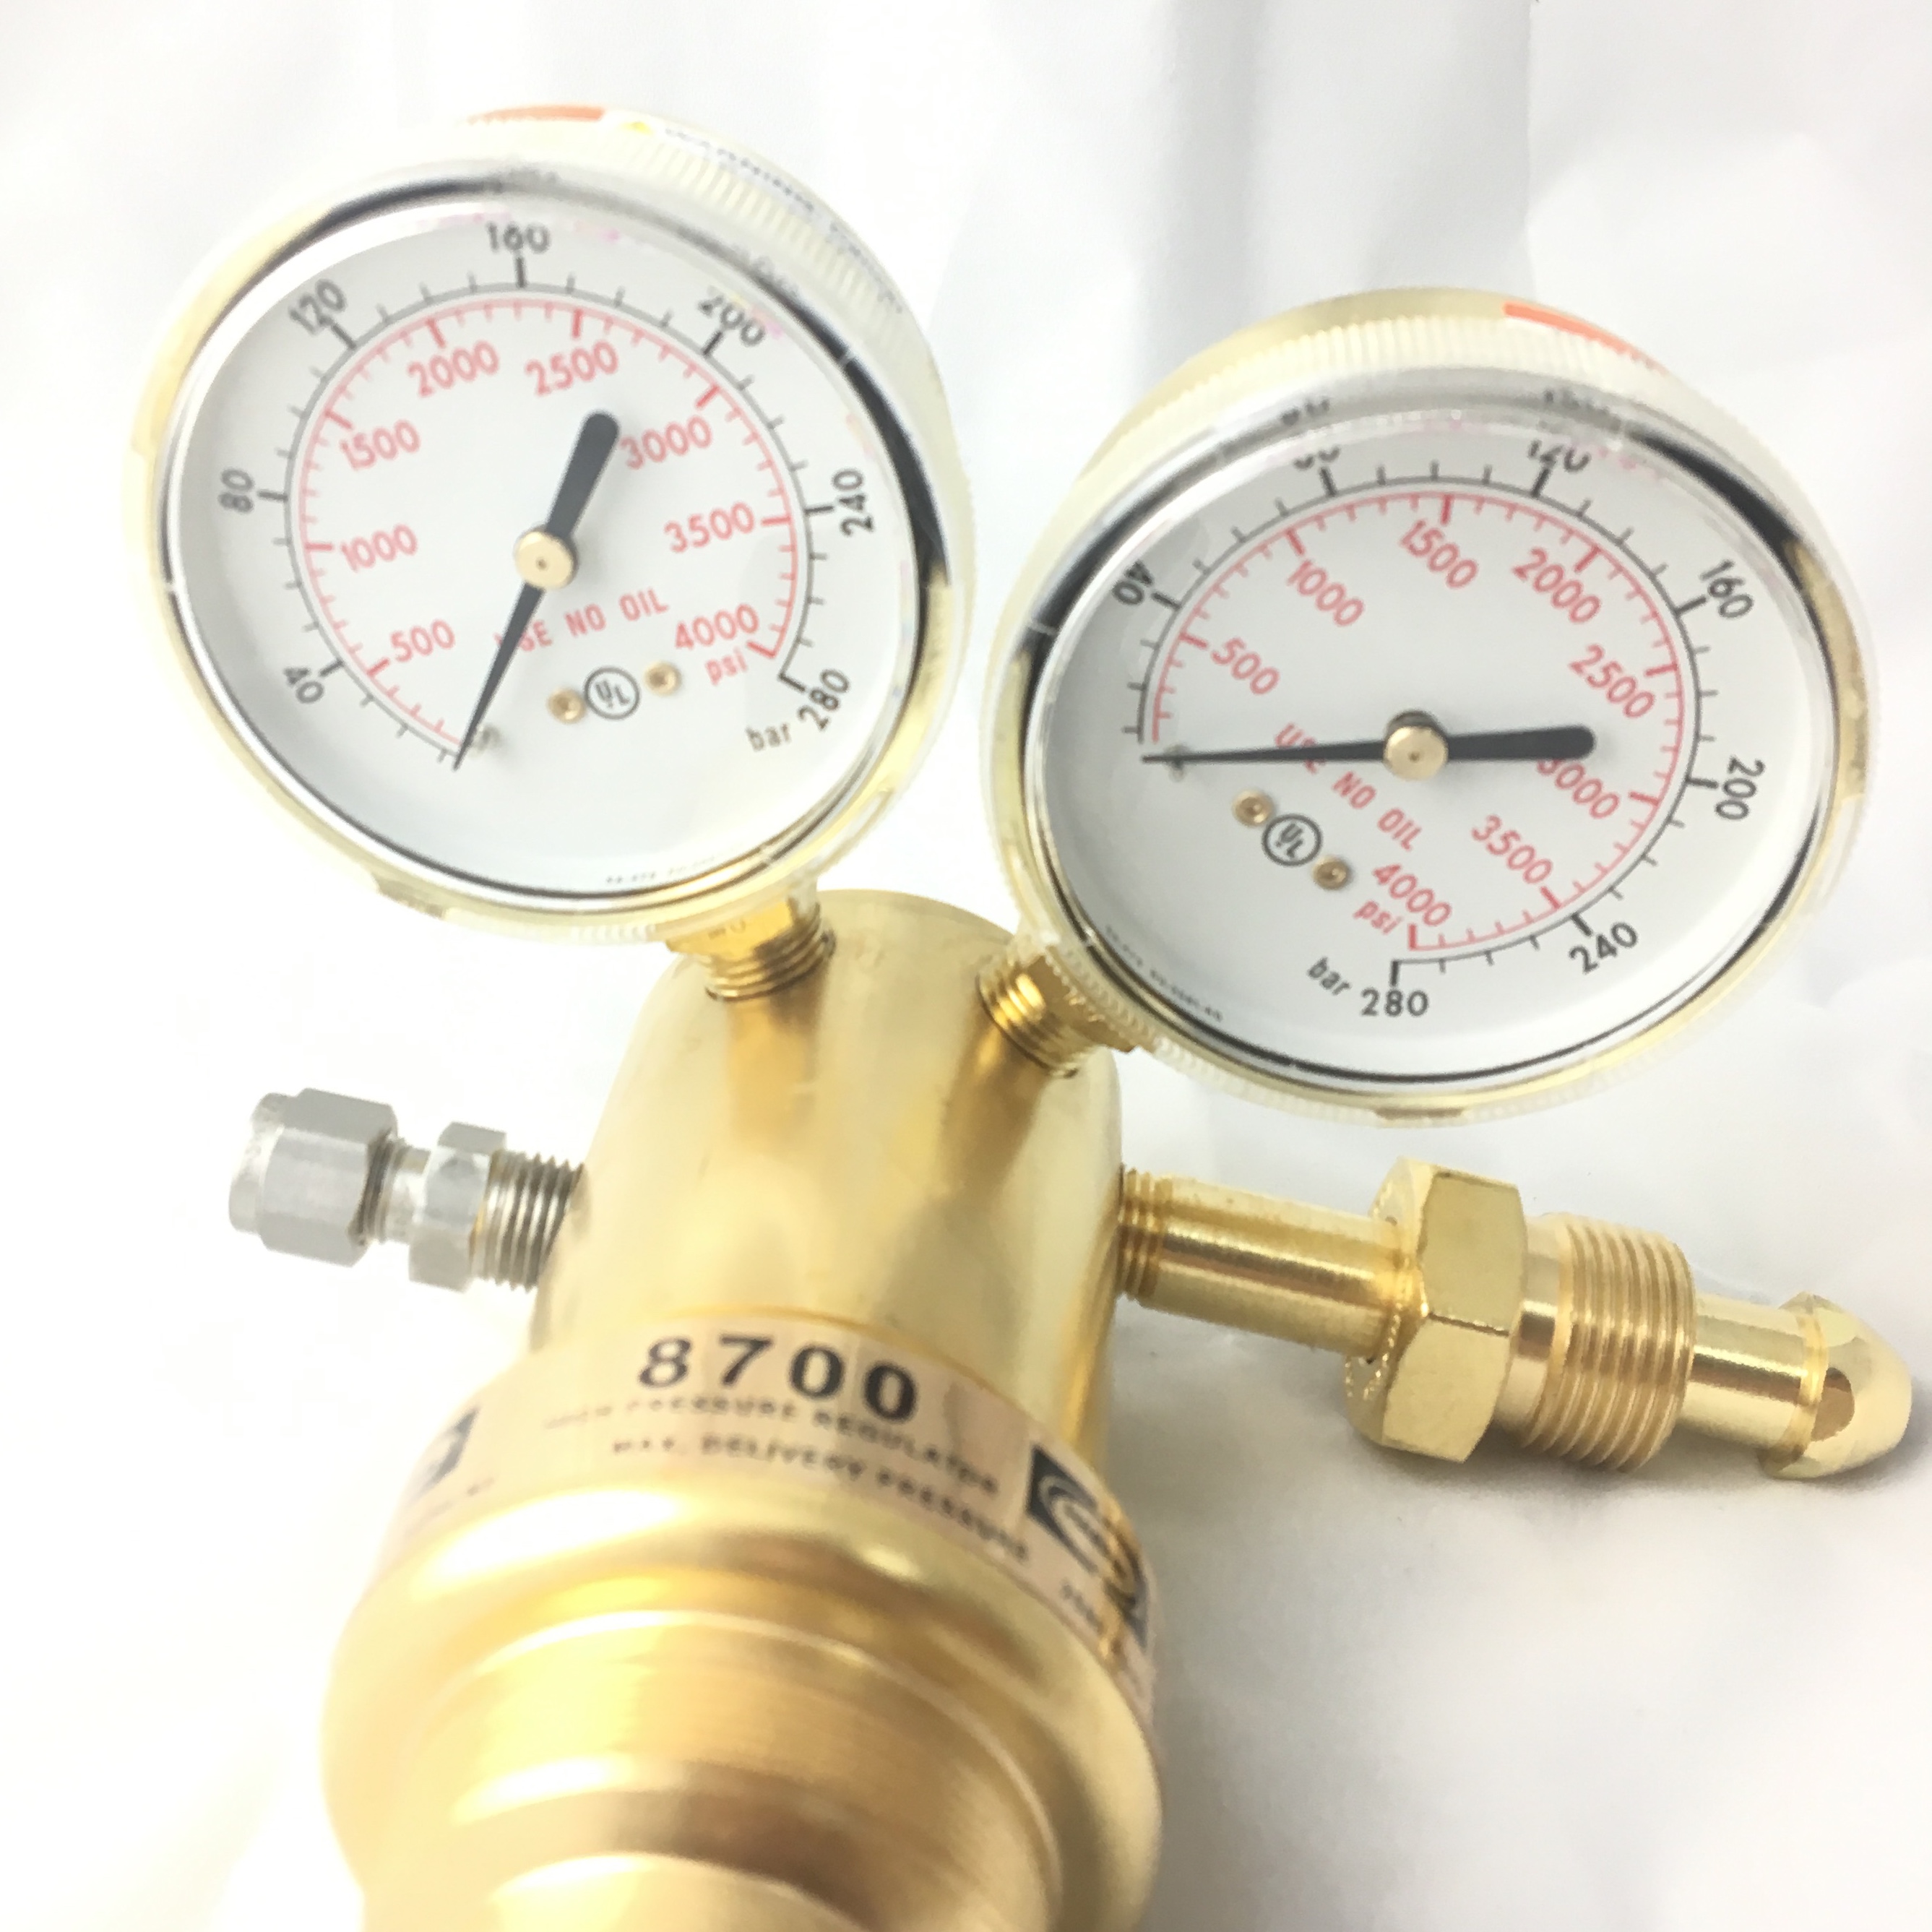 Industrial Nitrogen Pressure Gauge Nitrogen Pressure Regulator Gauge for Industrial Use Nitrogen Pressure Gauge Pressure Gauges Nitrogen Regulator 